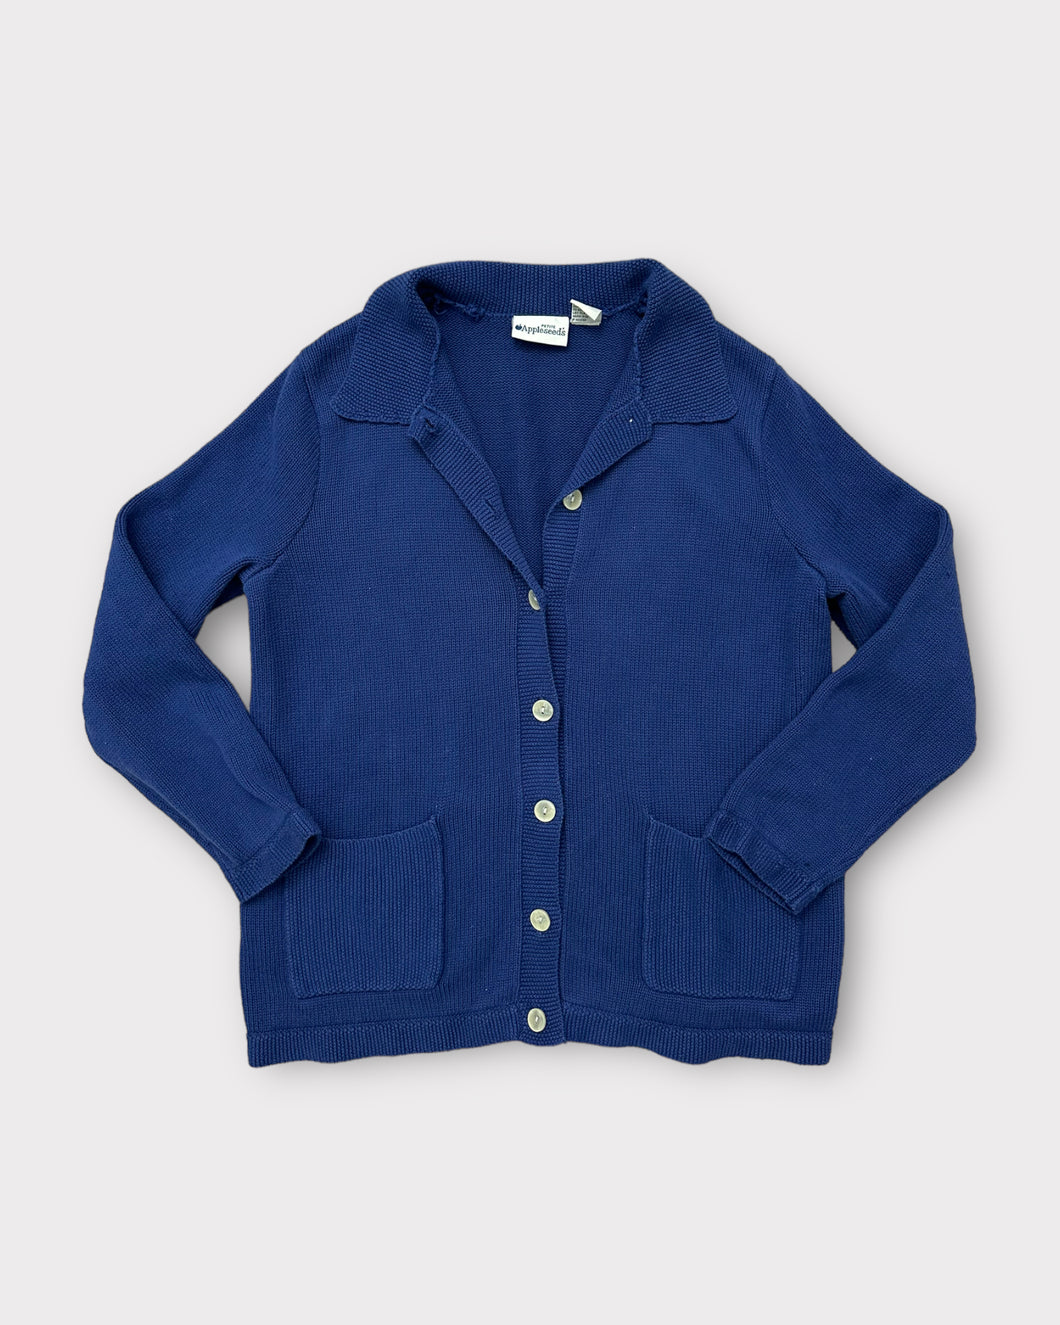 Appleseed Blue Cotton Collar Cardigan (M)